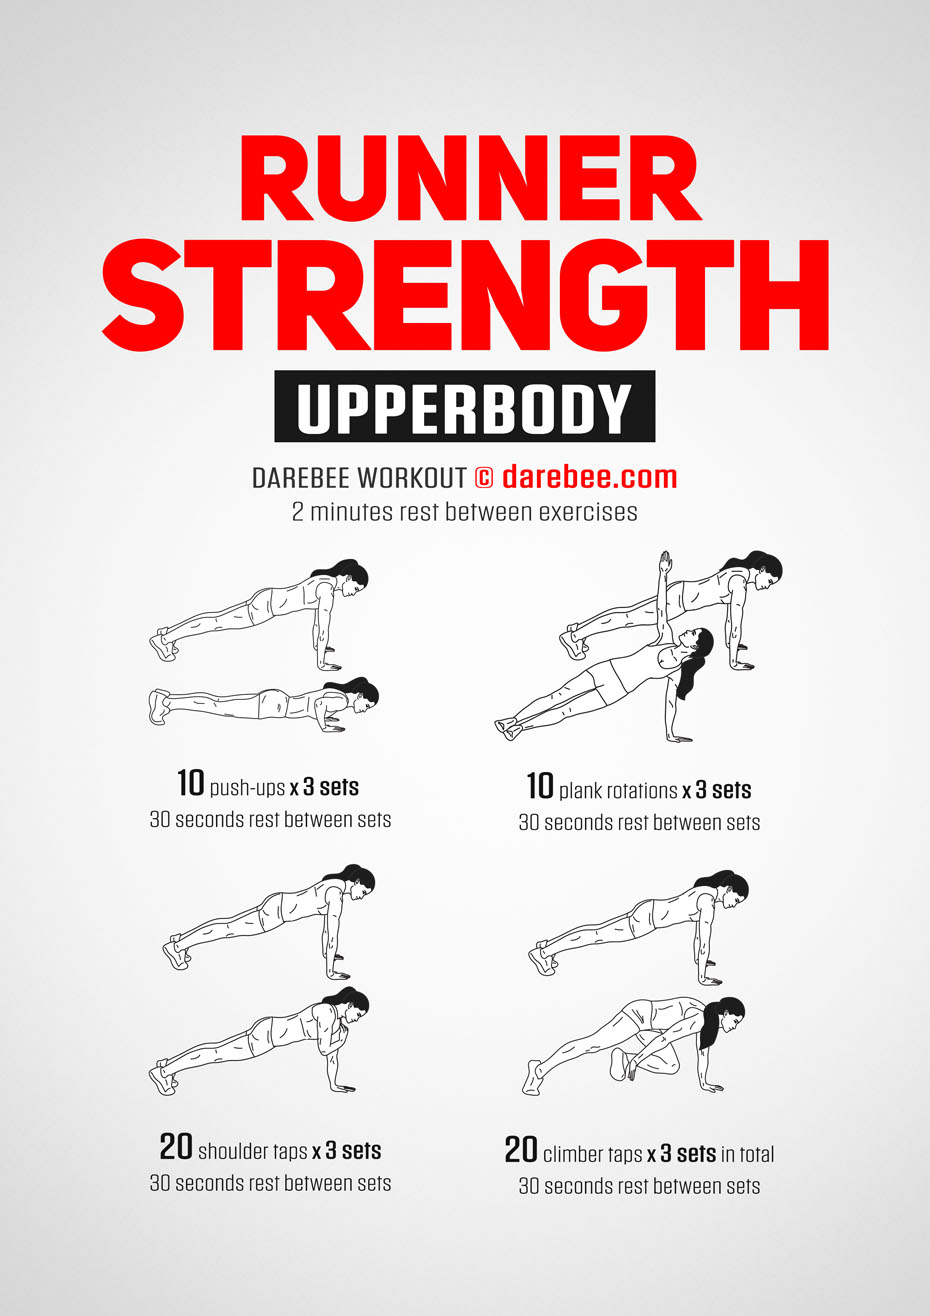 Runner Strength Upperbody Workout